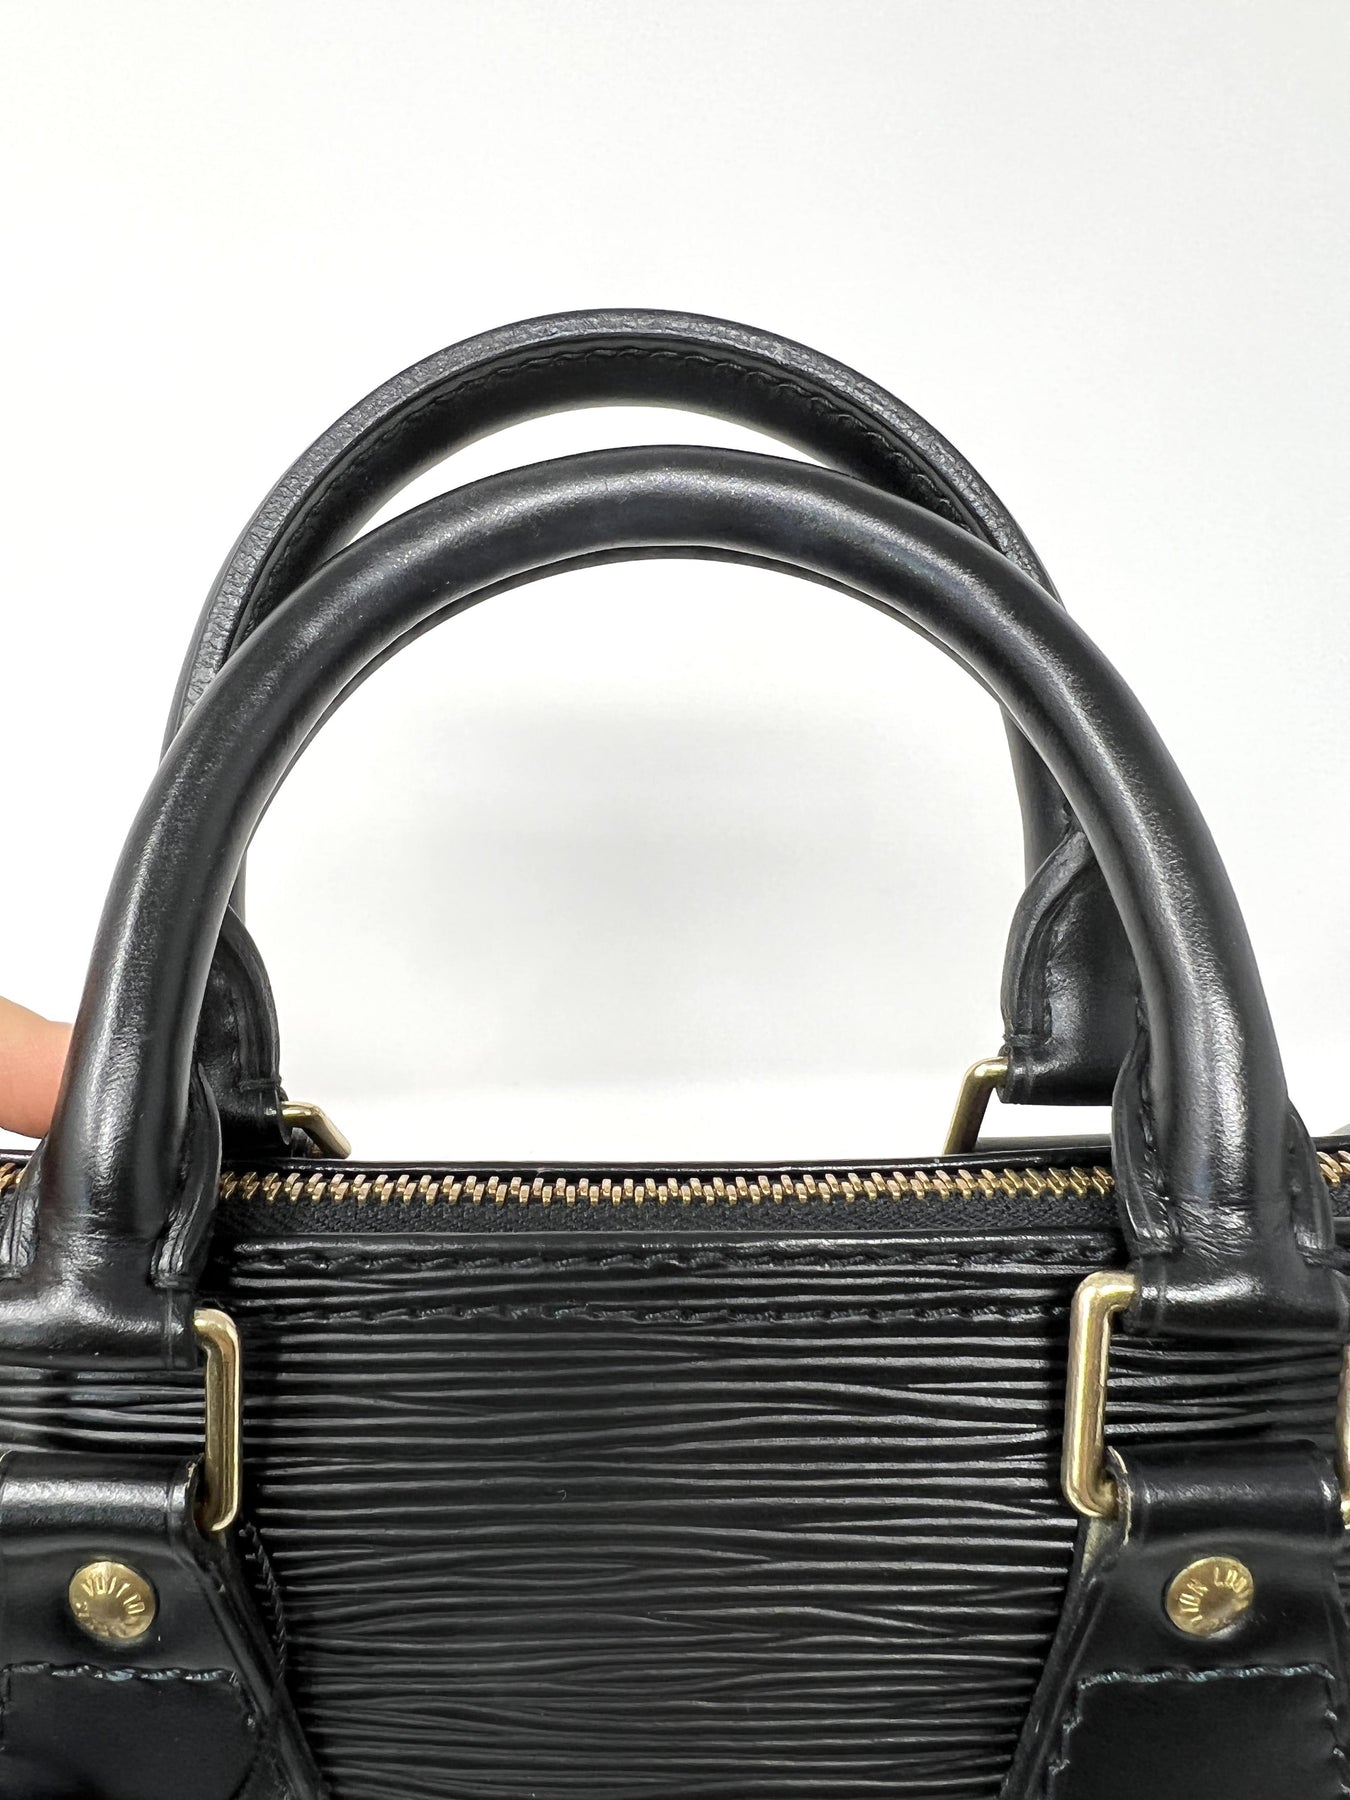 Louis Vuitton Speedy Noir 25 872843 Black Epi Leather Satchel